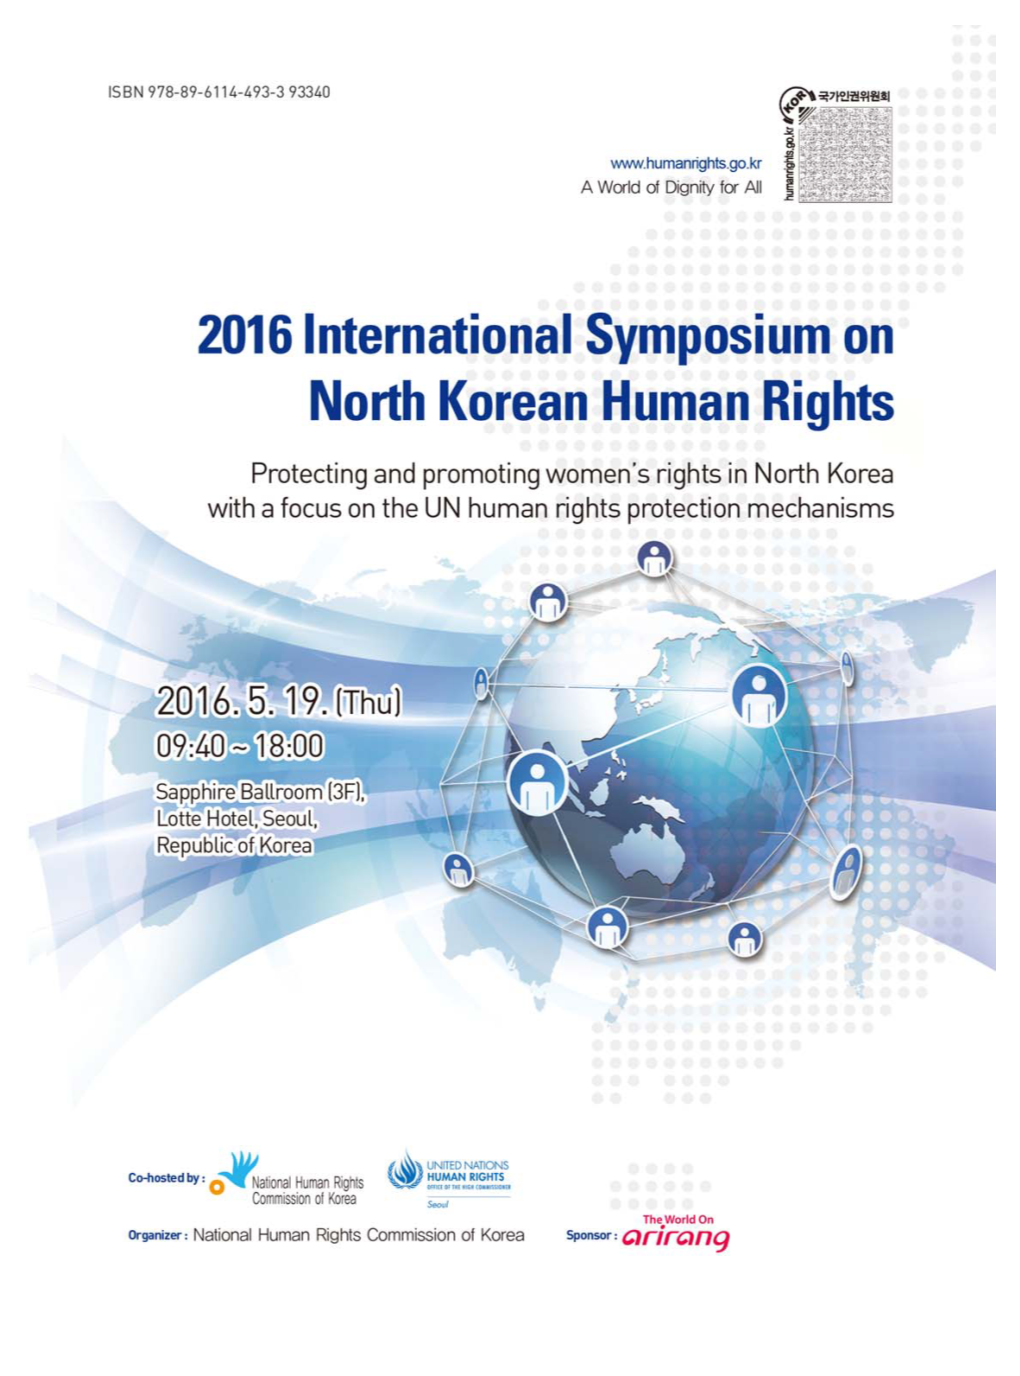 2016 International Symposium on NKHR